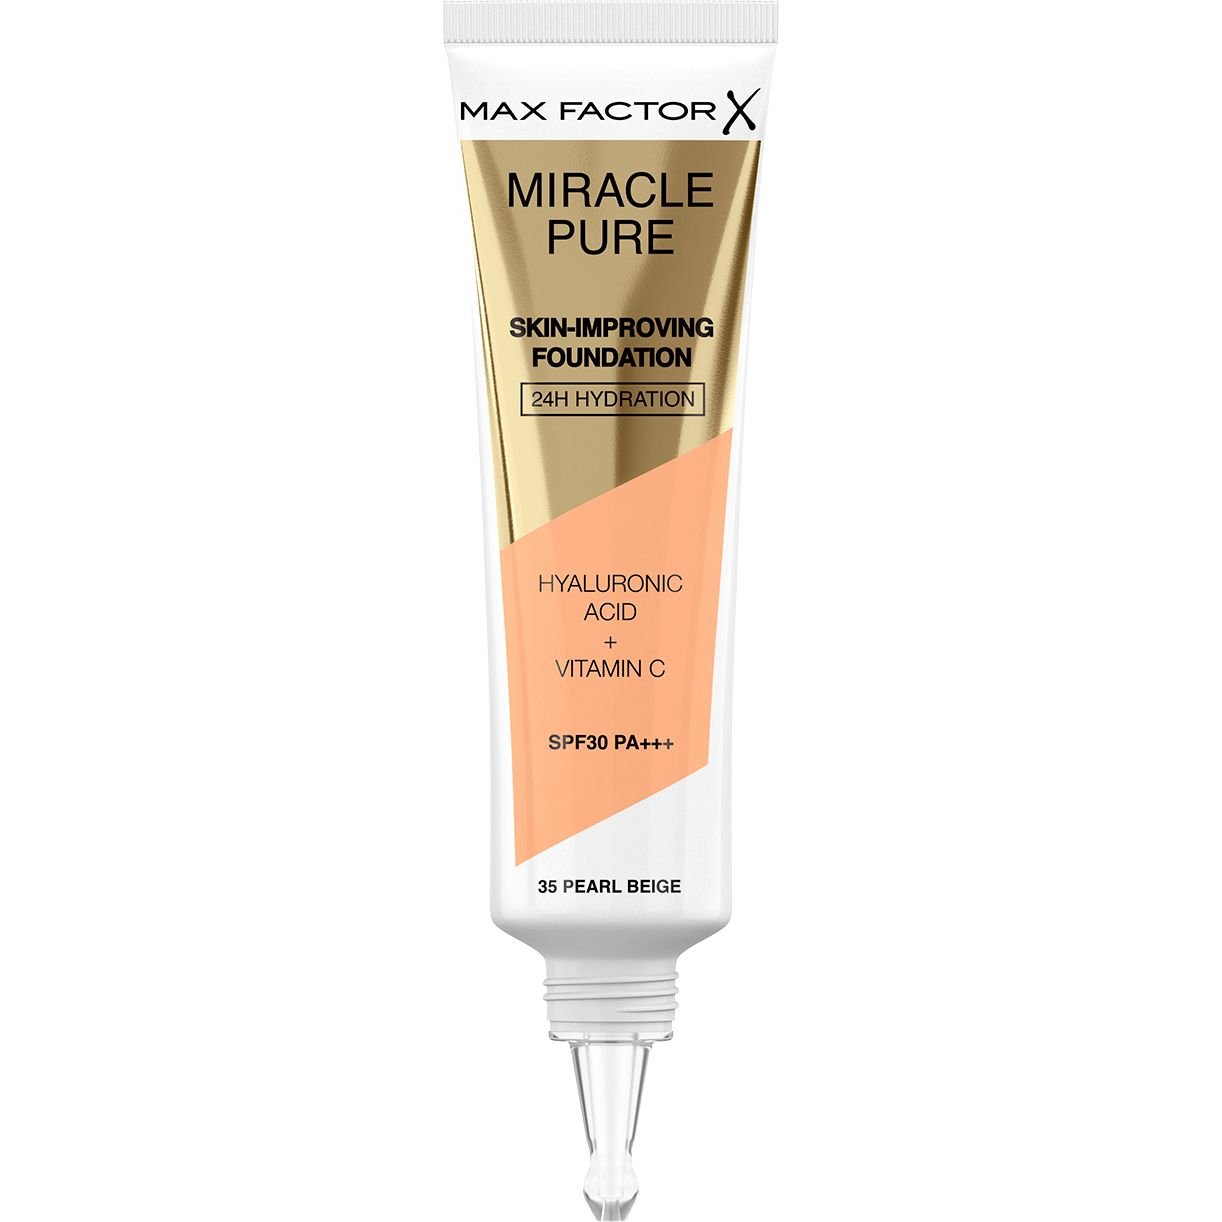 Тональная основа Max Factor Miracle Pure Skin-Improving Foundation SPF30 тон 035 (Pearl Beige) 30 мл - фото 2